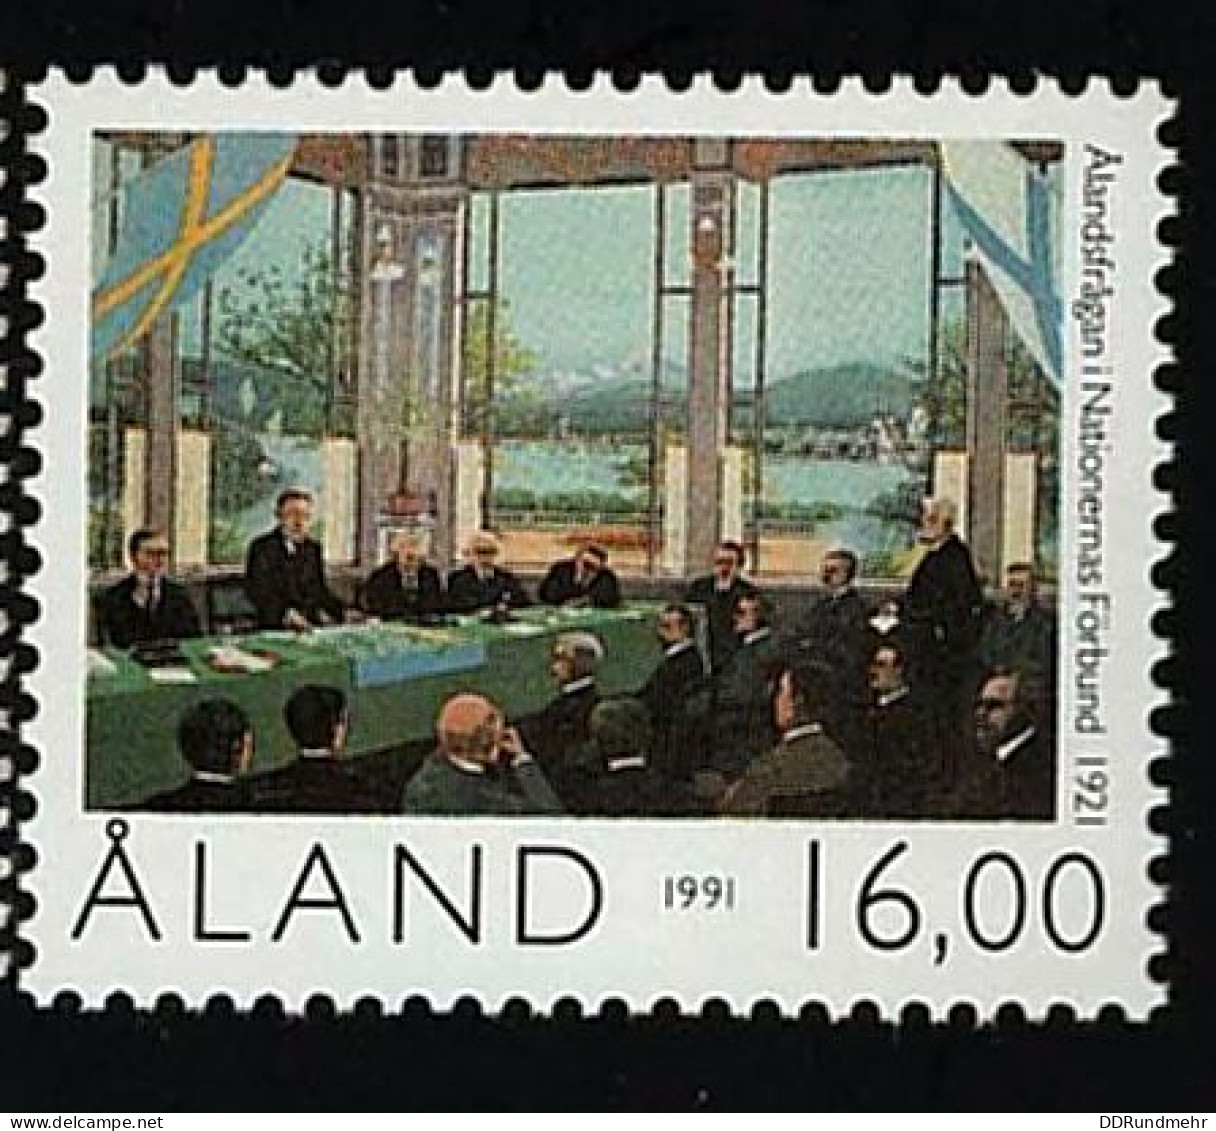 1991  Autonomie Michel AX 53 Stamp Number AX 59 Yvert Et Tellier AX 53 Stanley Gibbons AX 52 AFA AX 53 Xx MNH - Aland